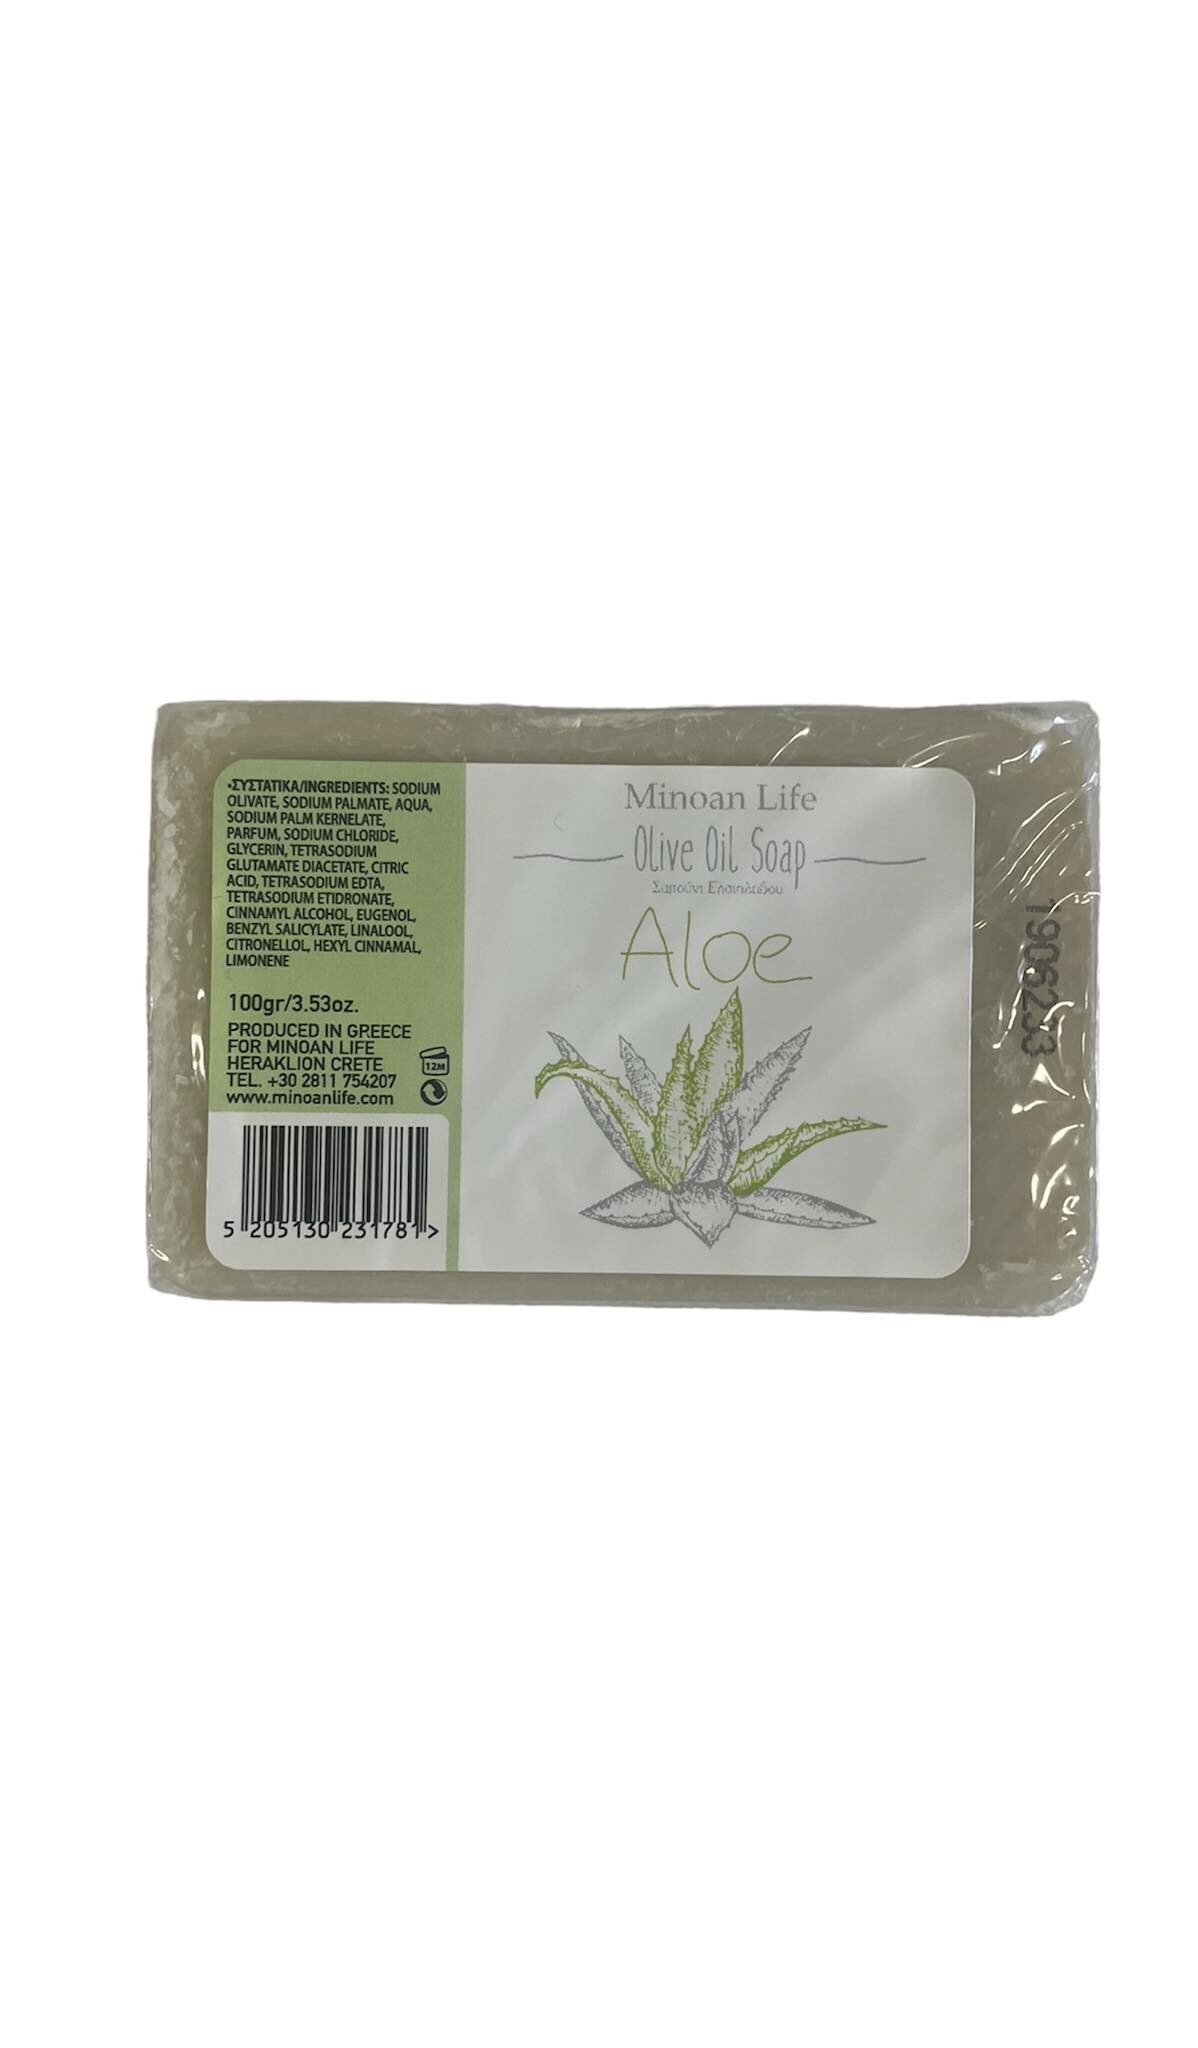 Minoan Life Σαπούνι Ελαιόλαδου Αλόη / Minoan Life Olive Oil Soap Aloe